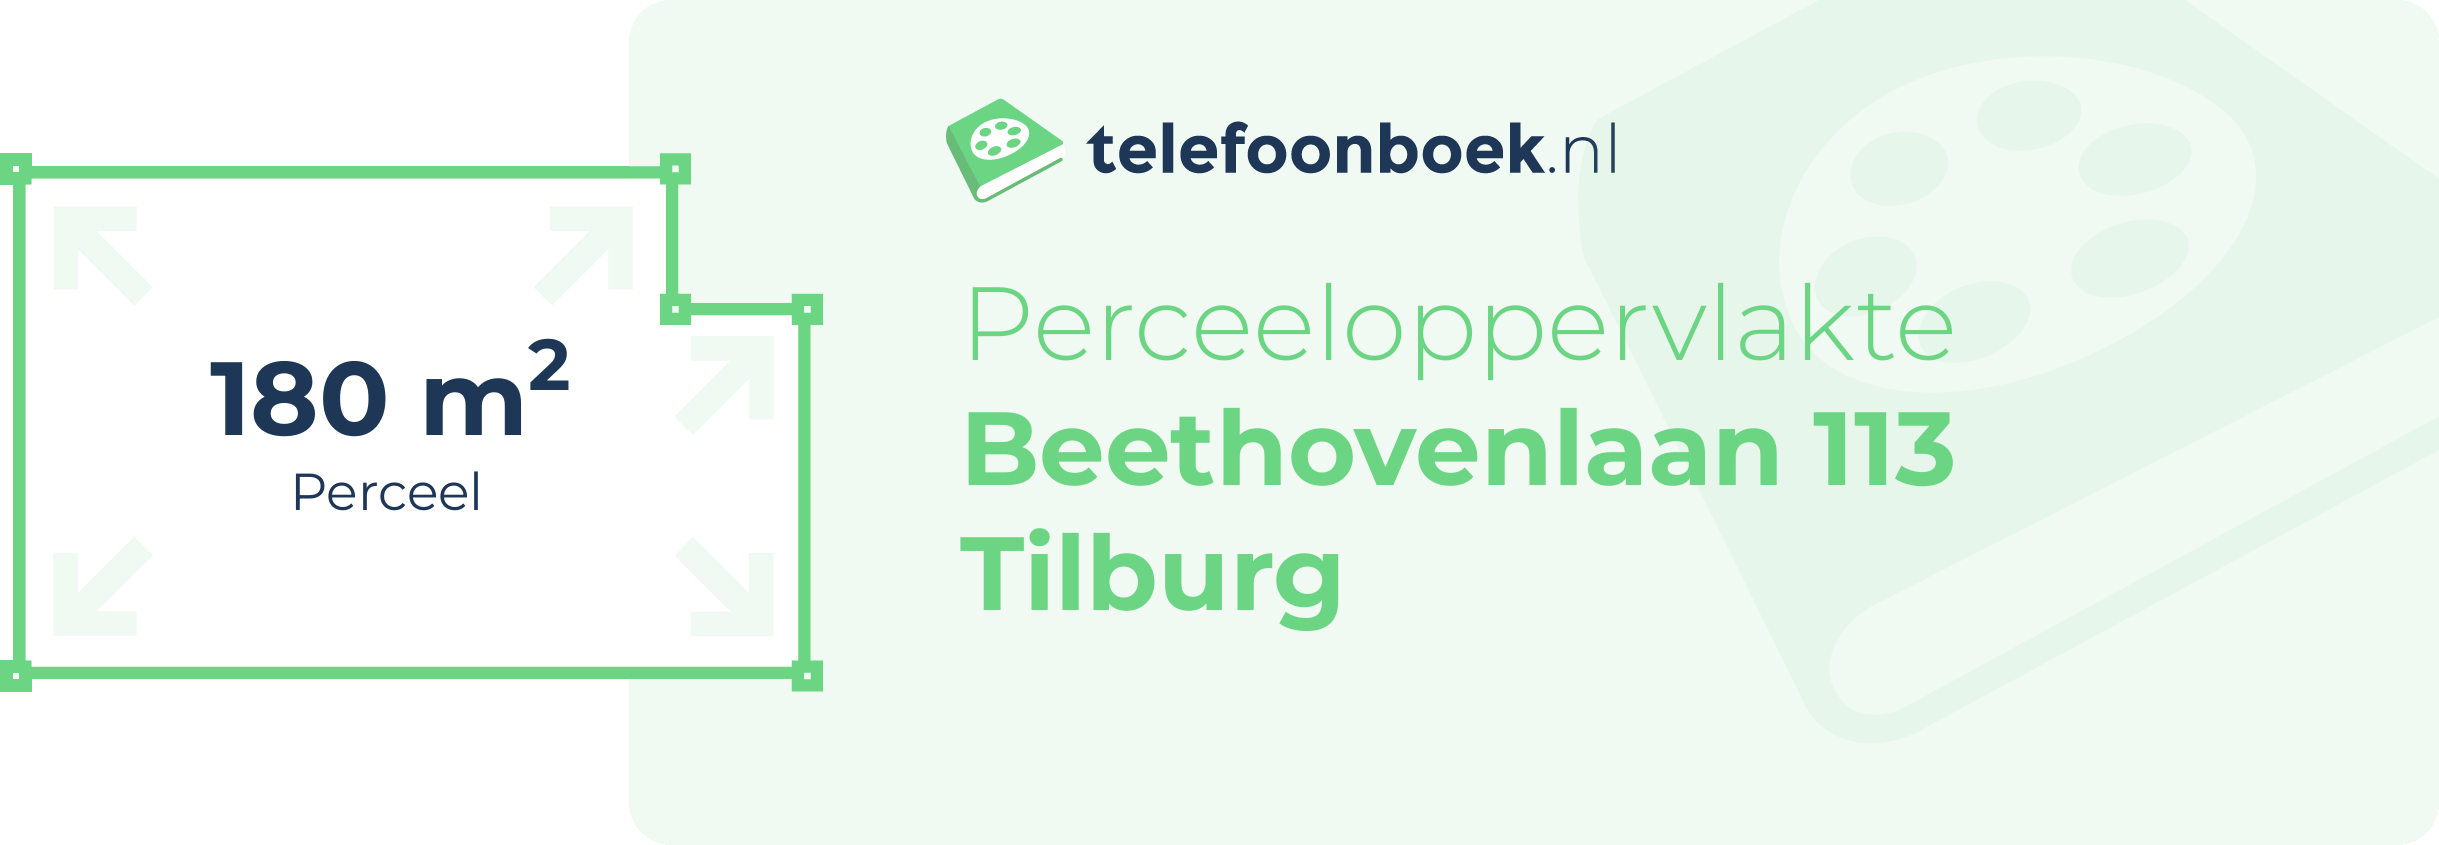 Perceeloppervlakte Beethovenlaan 113 Tilburg